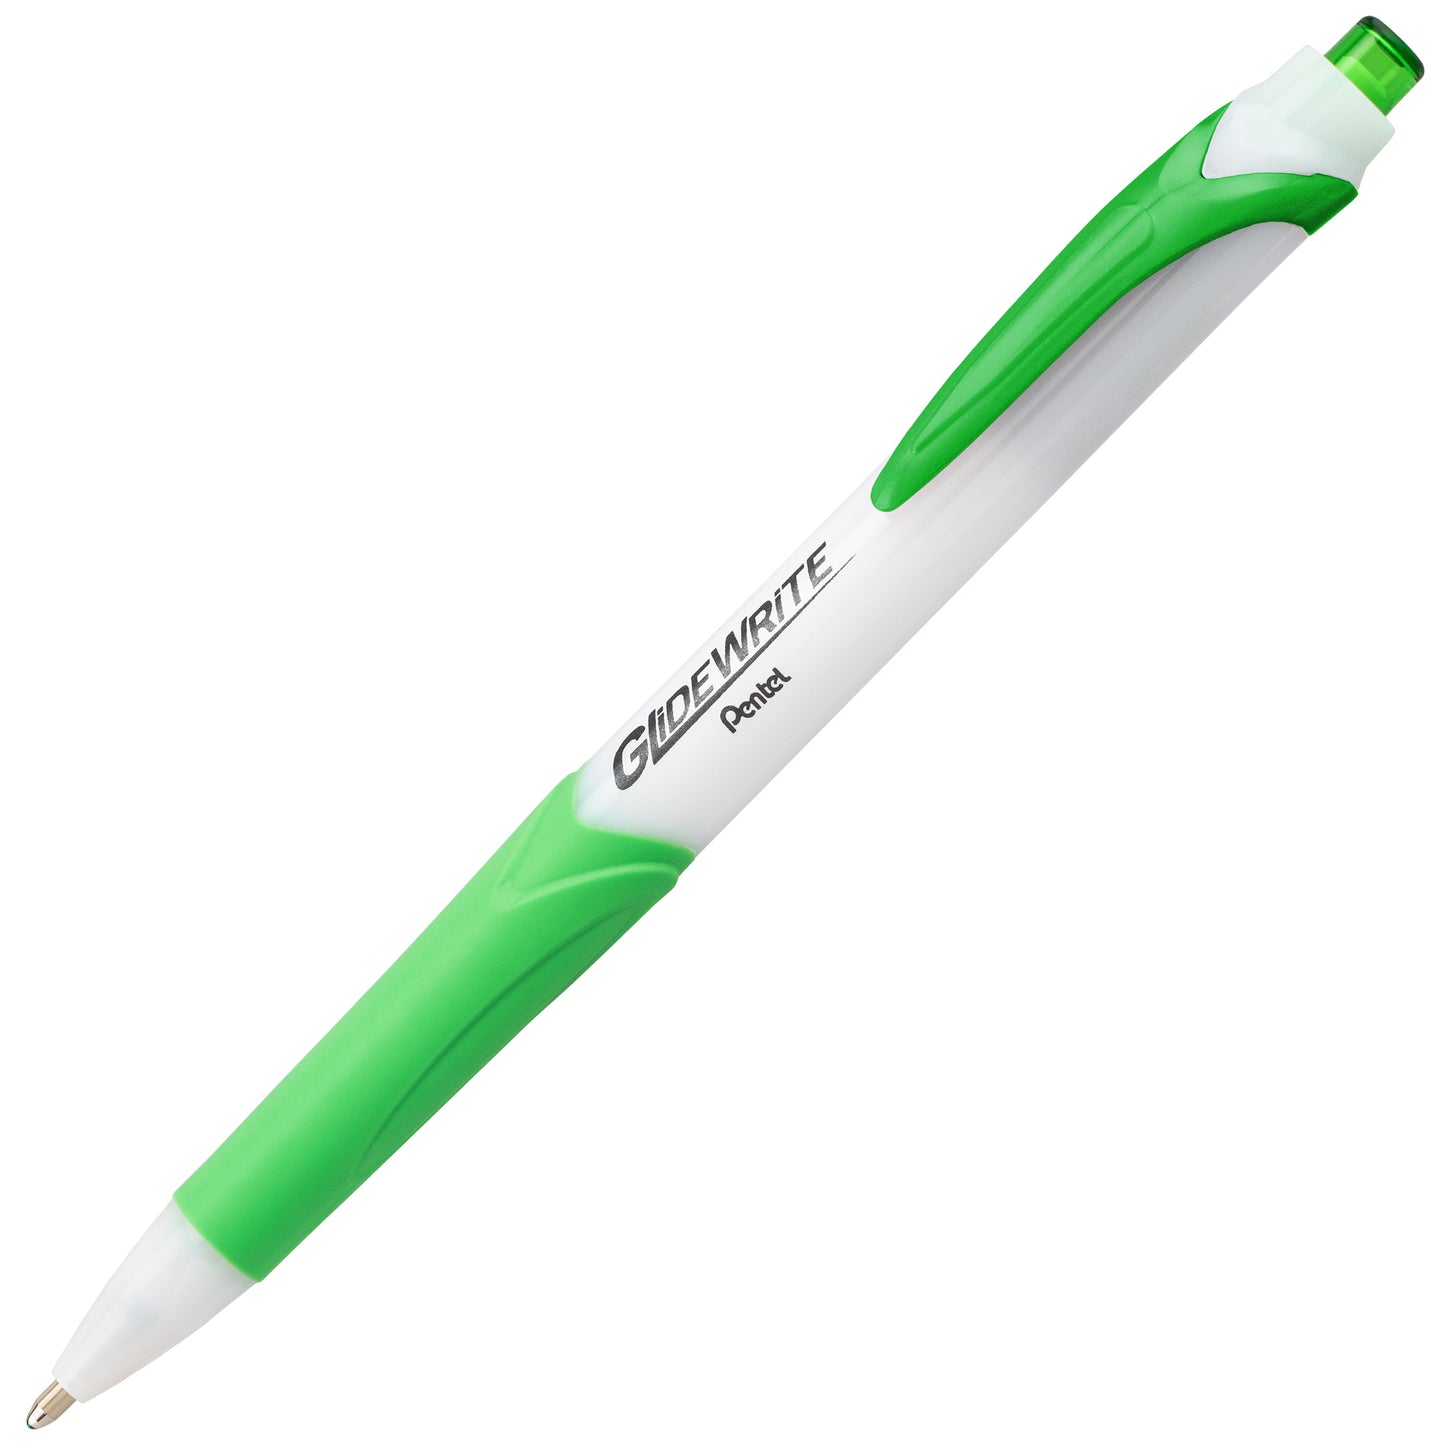 GlideWrite 2-in-1 Ballpoint Pen